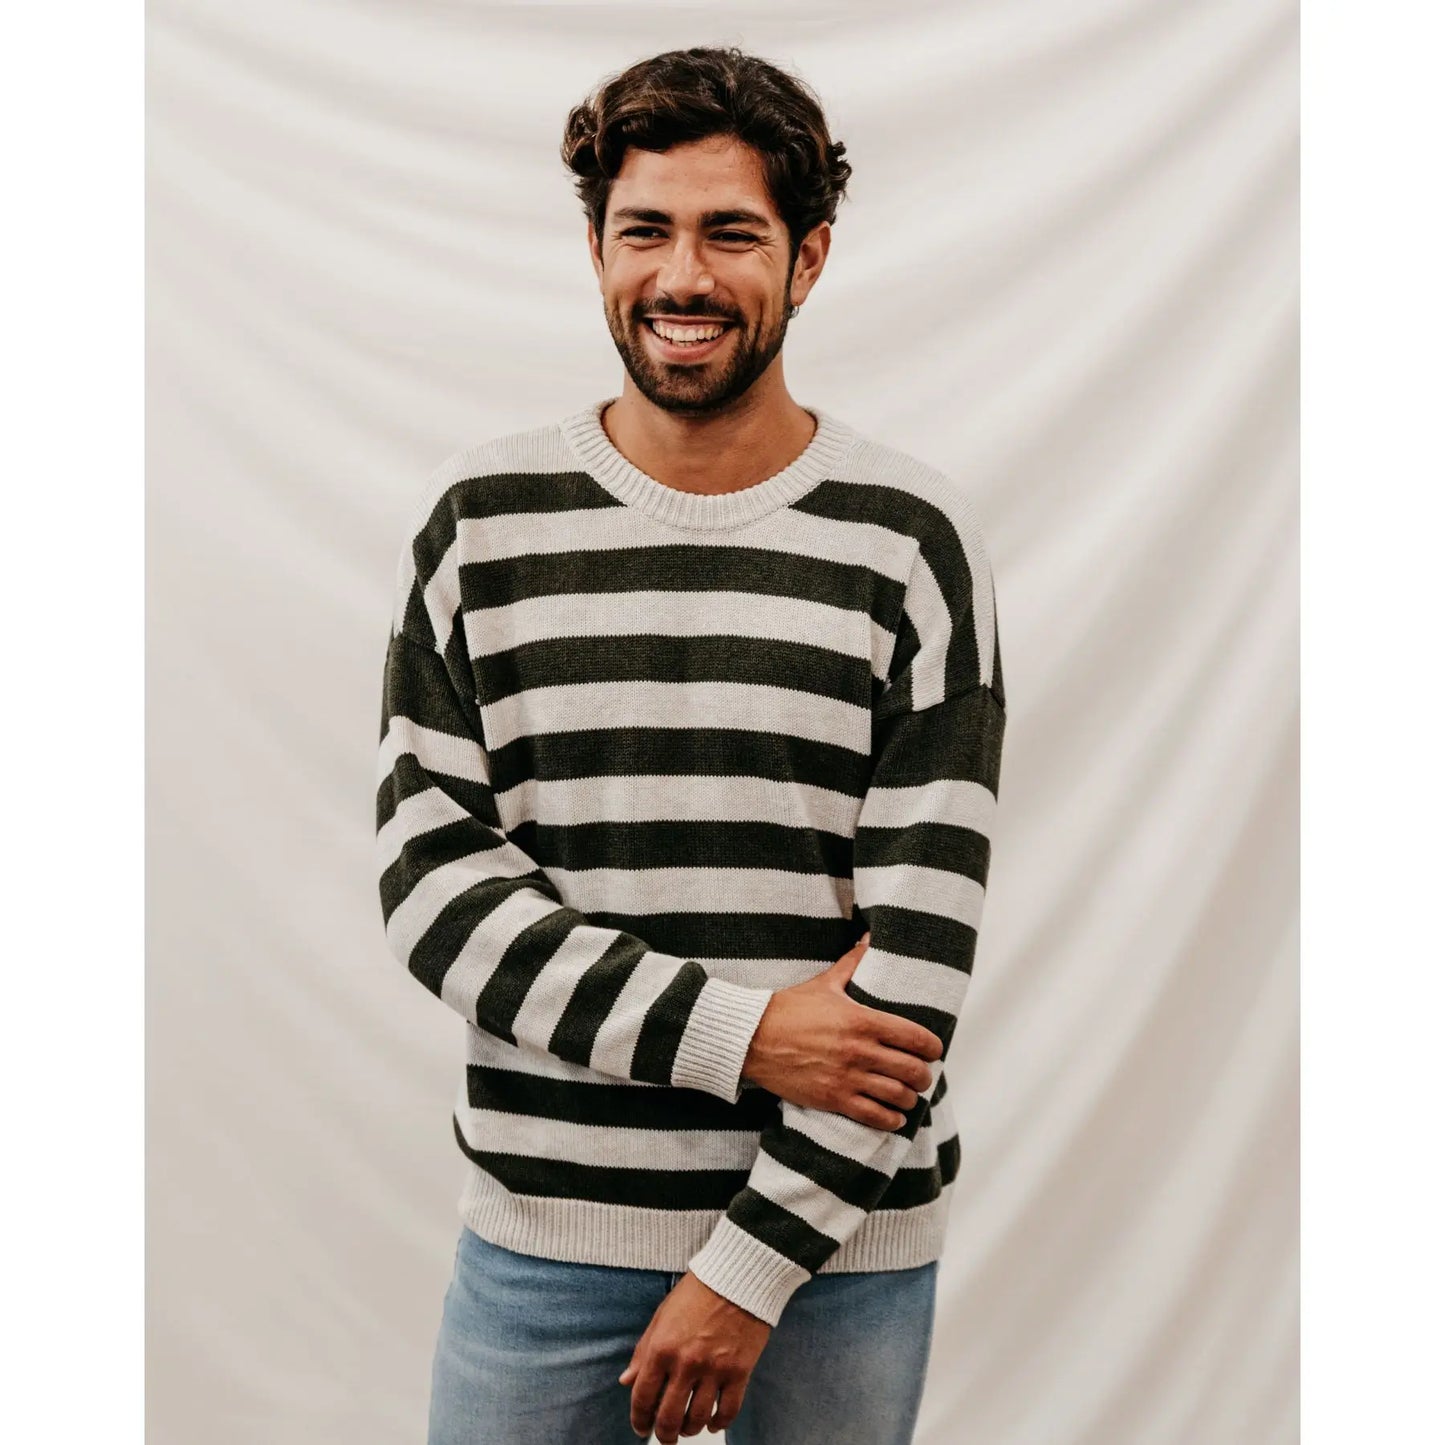 Striped Hygge sweater • unisex